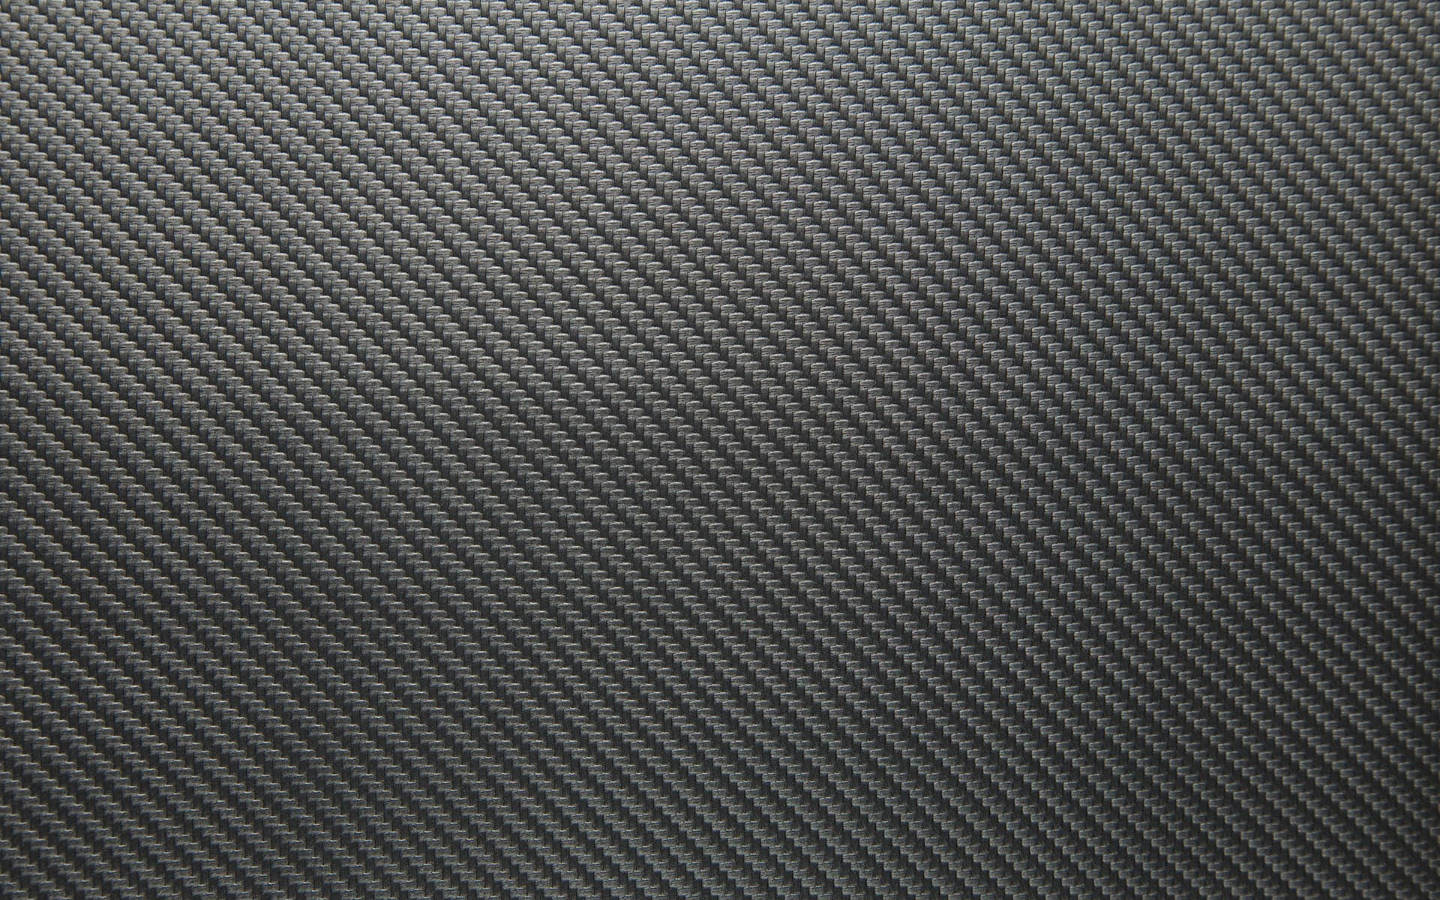 Carbon Fiber Texture In 4k